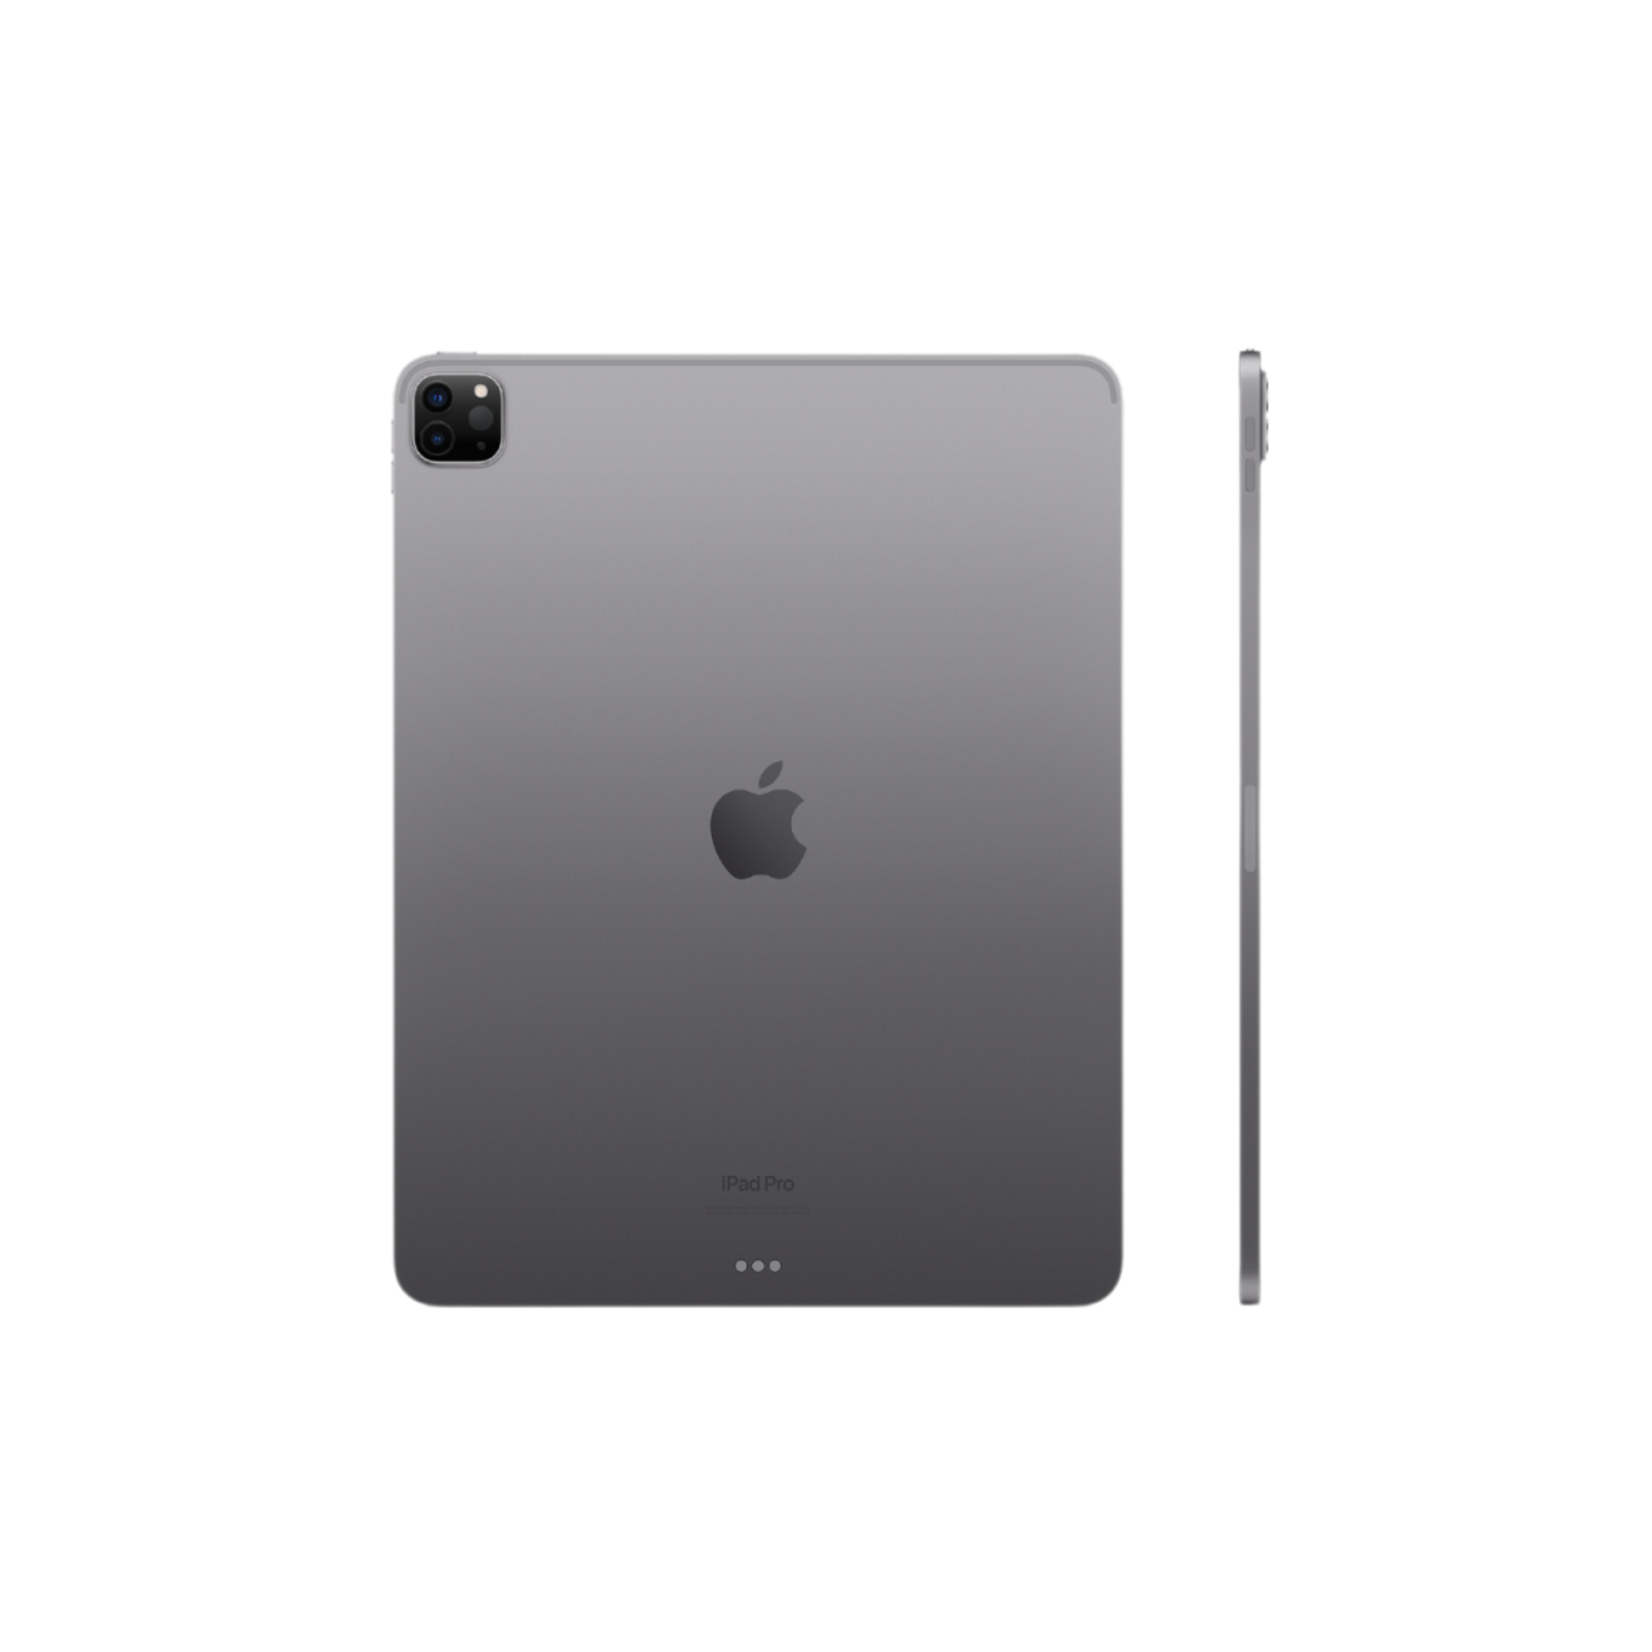 Apple 12.9-inch iPad Pro - 256GB - Space Gray